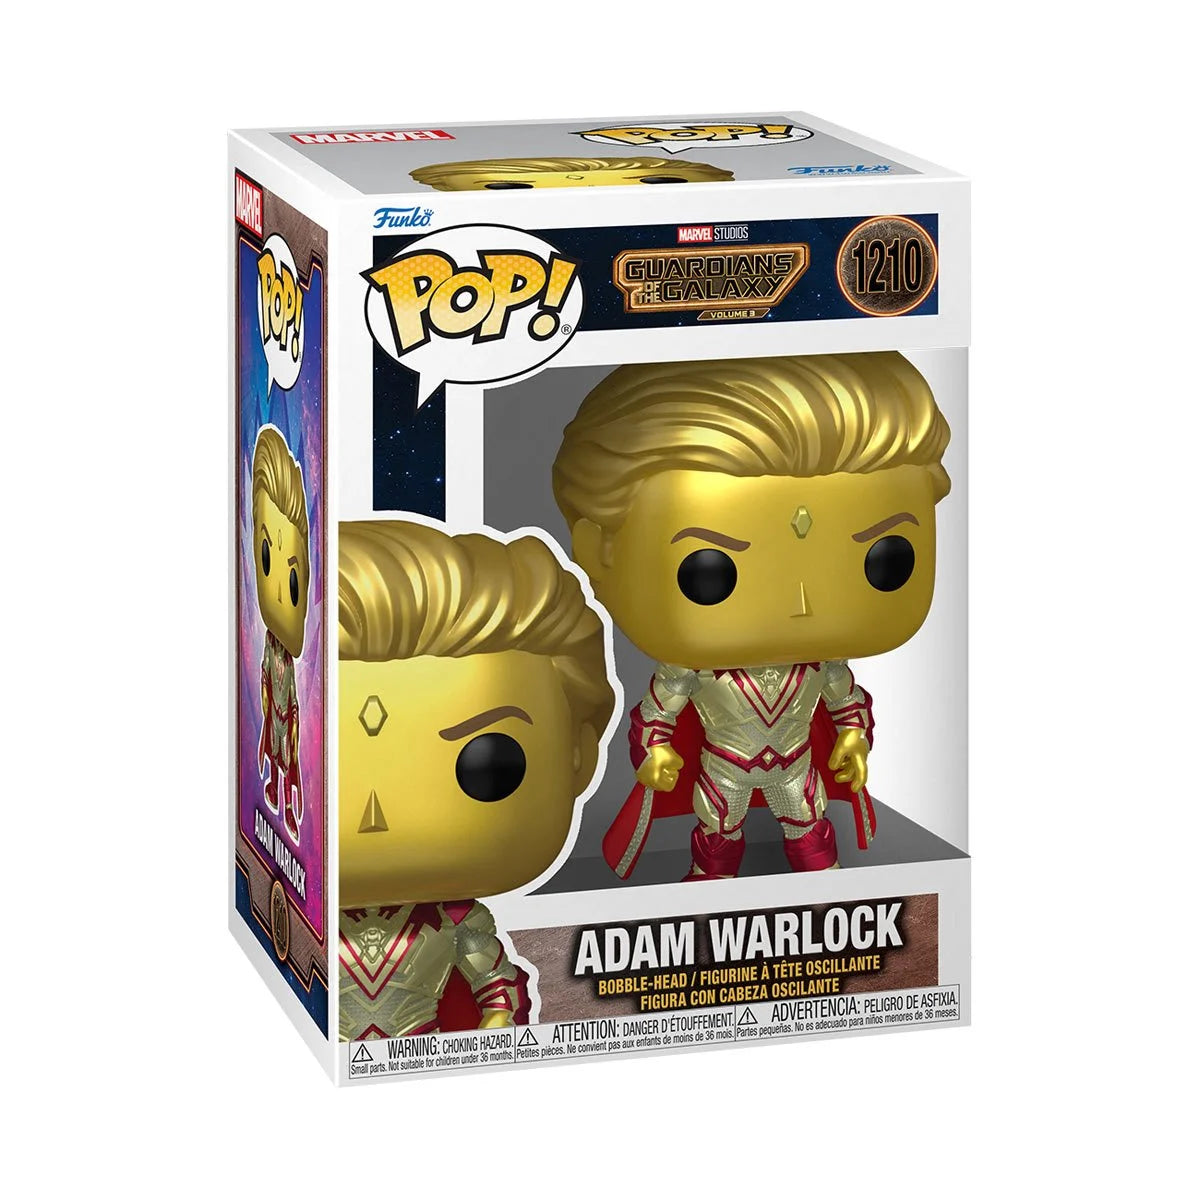 Adam Warlock Guardians of the Galaxy Volume 3 Pop! Vinyl Figure